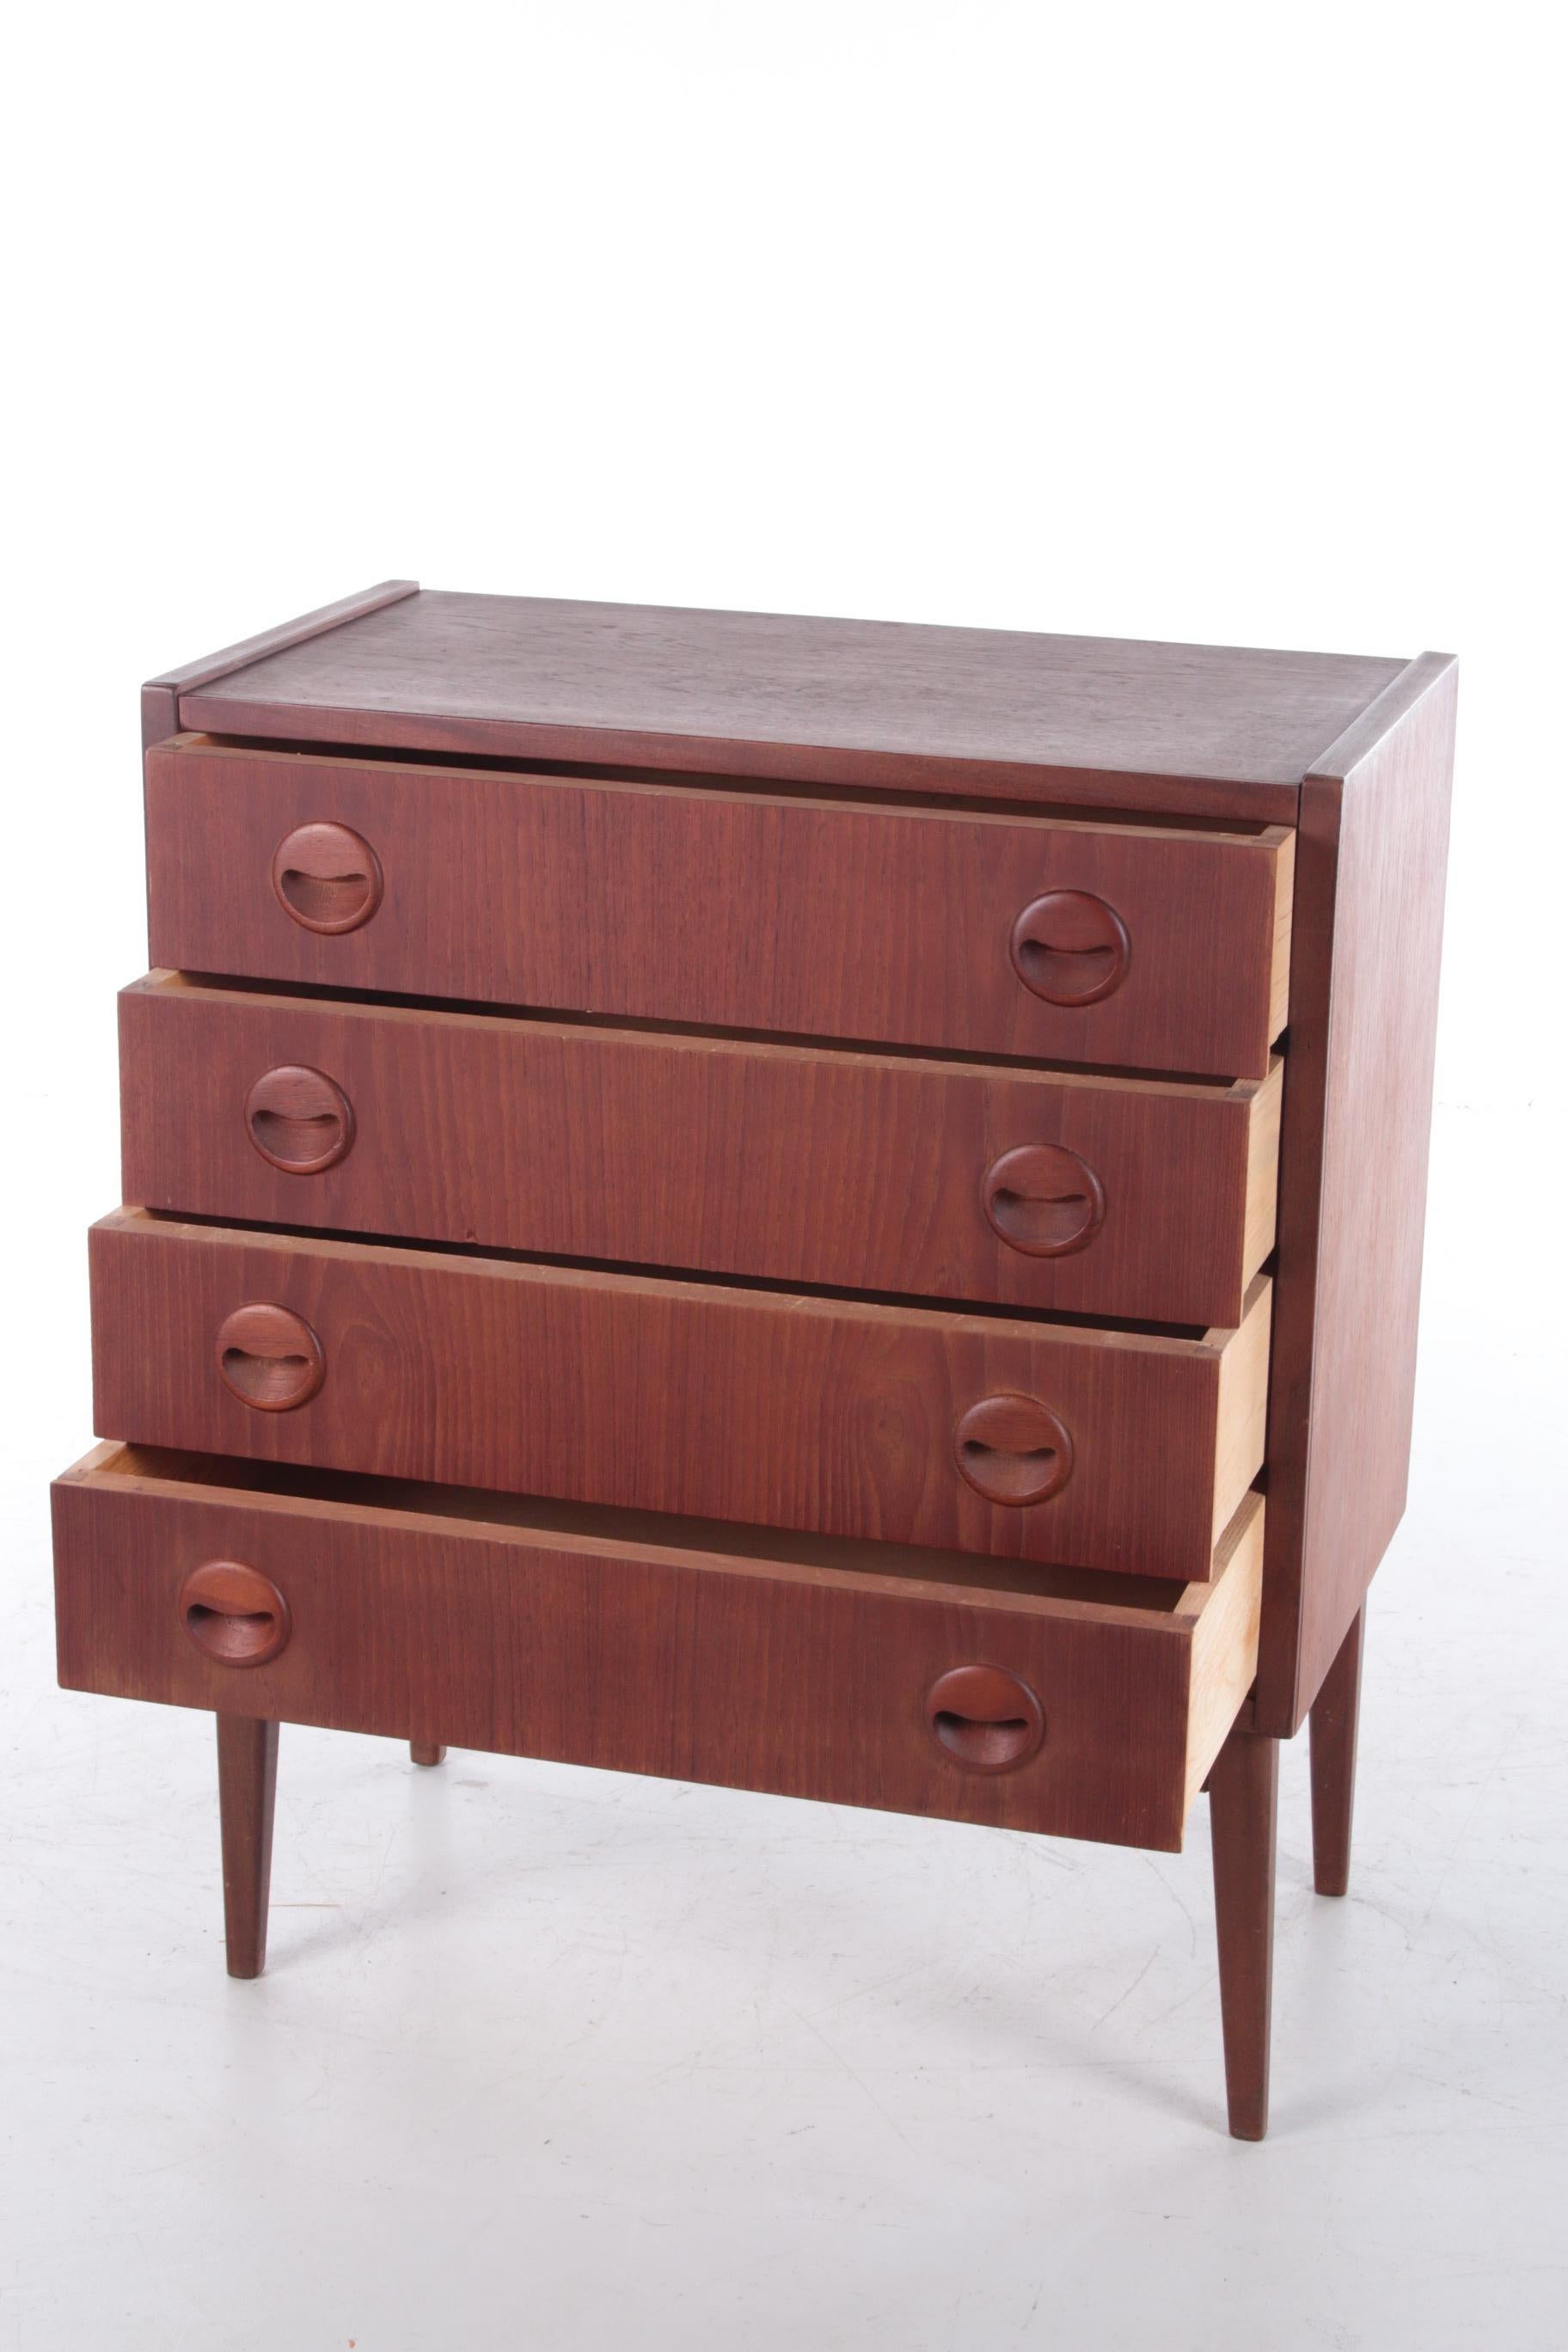 designer chest of drawers